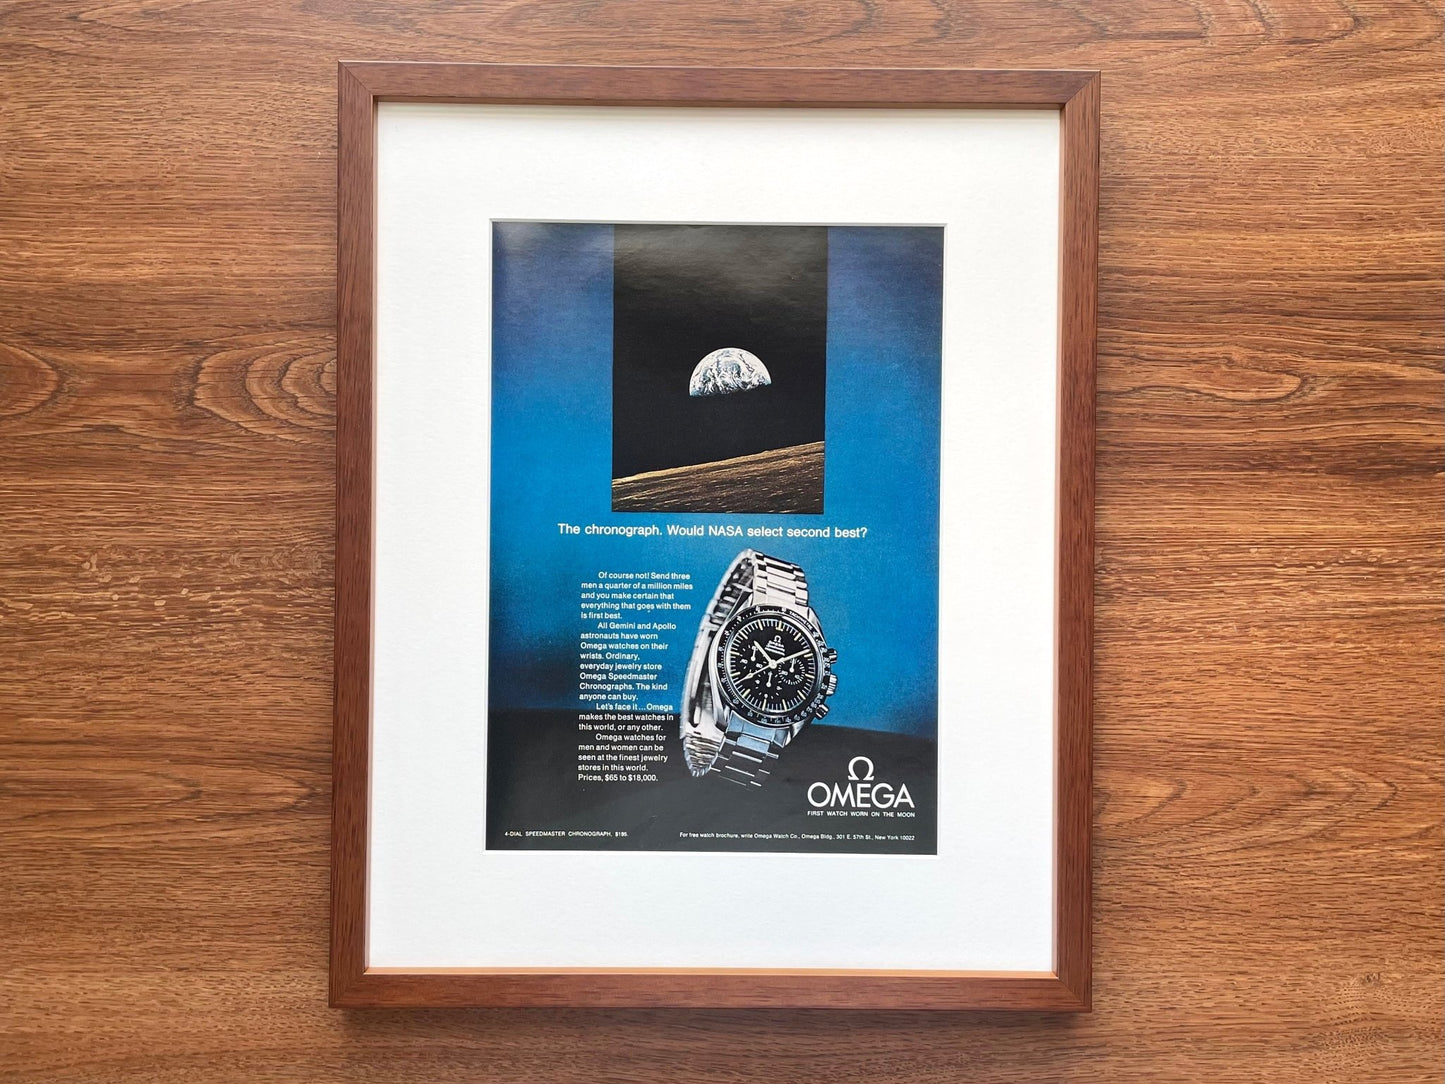 1970 Omega Speedmaster "NASA select second best?" Advertisement in Walnut Wood Frame